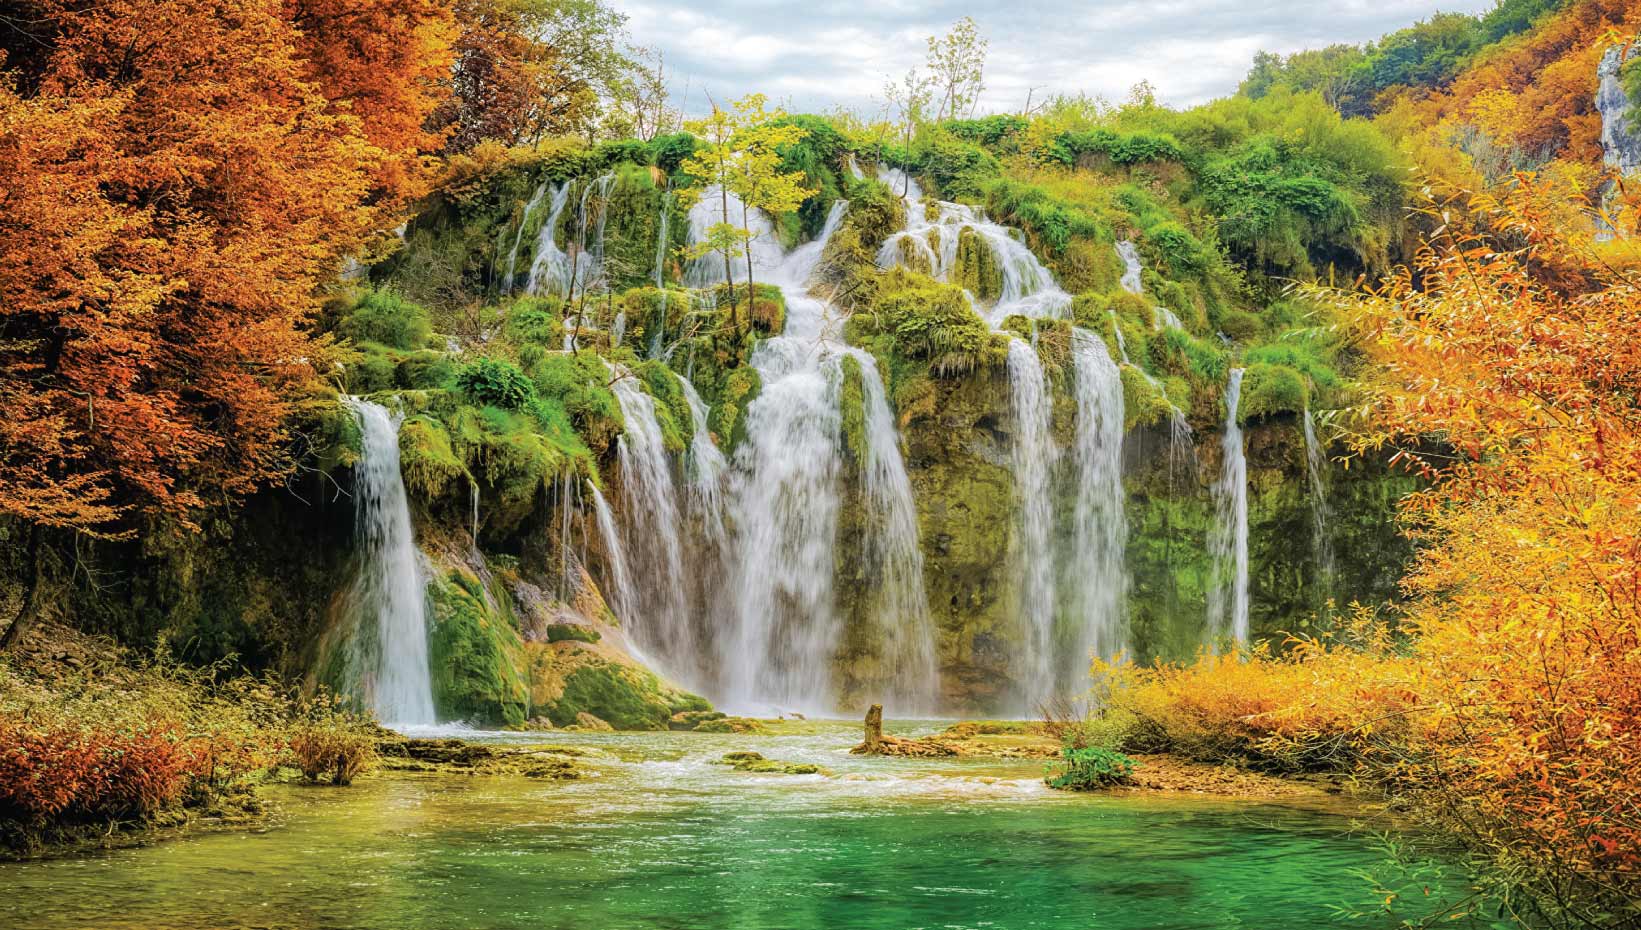 Croatia-Plitvice Lakes National Park